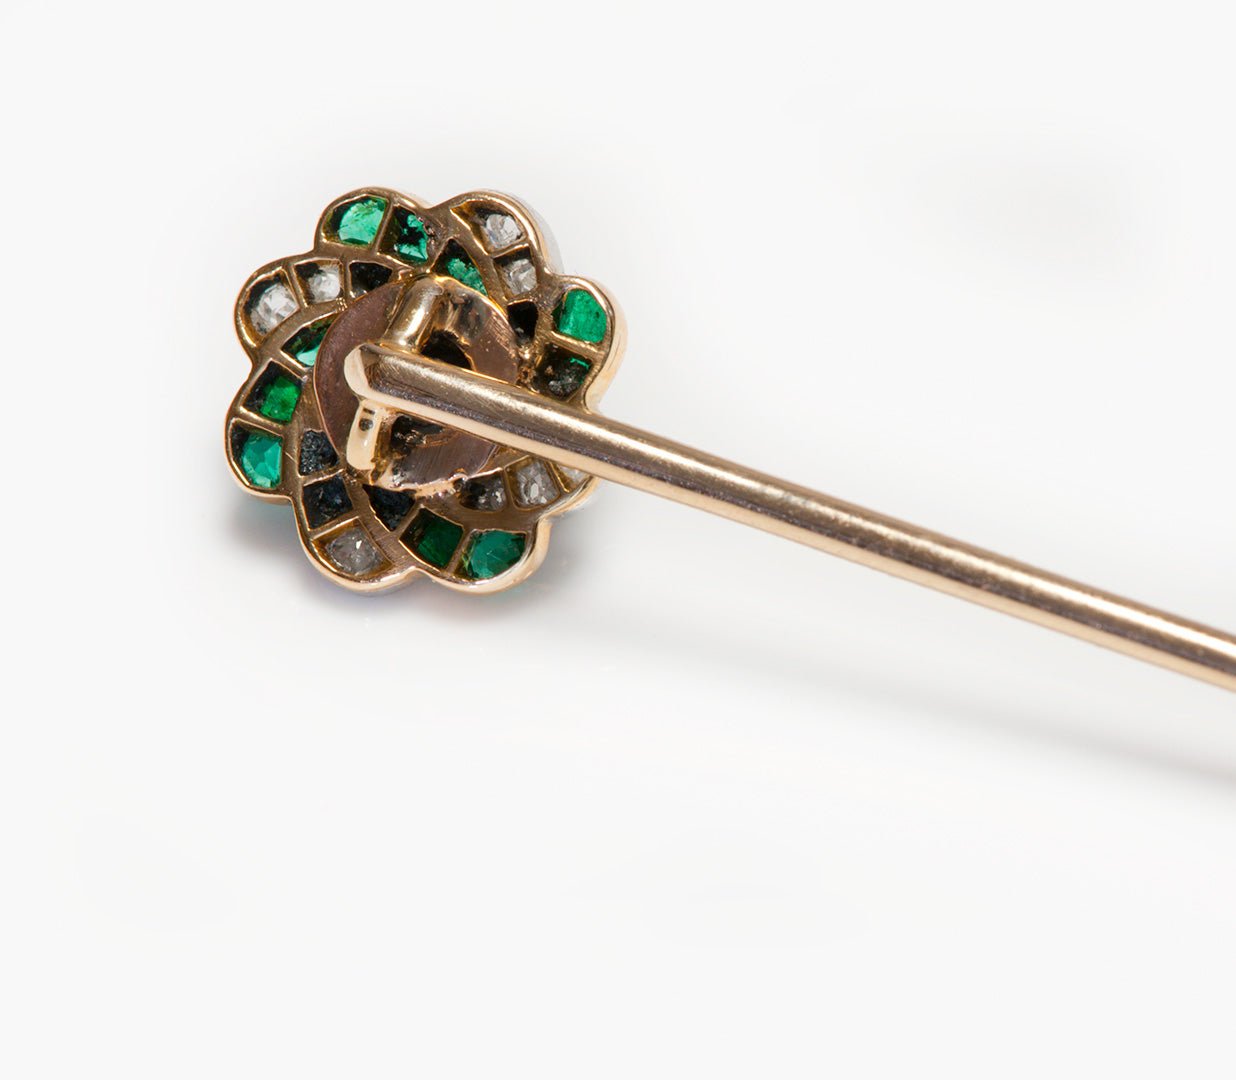 Antique Edwardian Calibre Cut Emerald Diamond Stick Pin